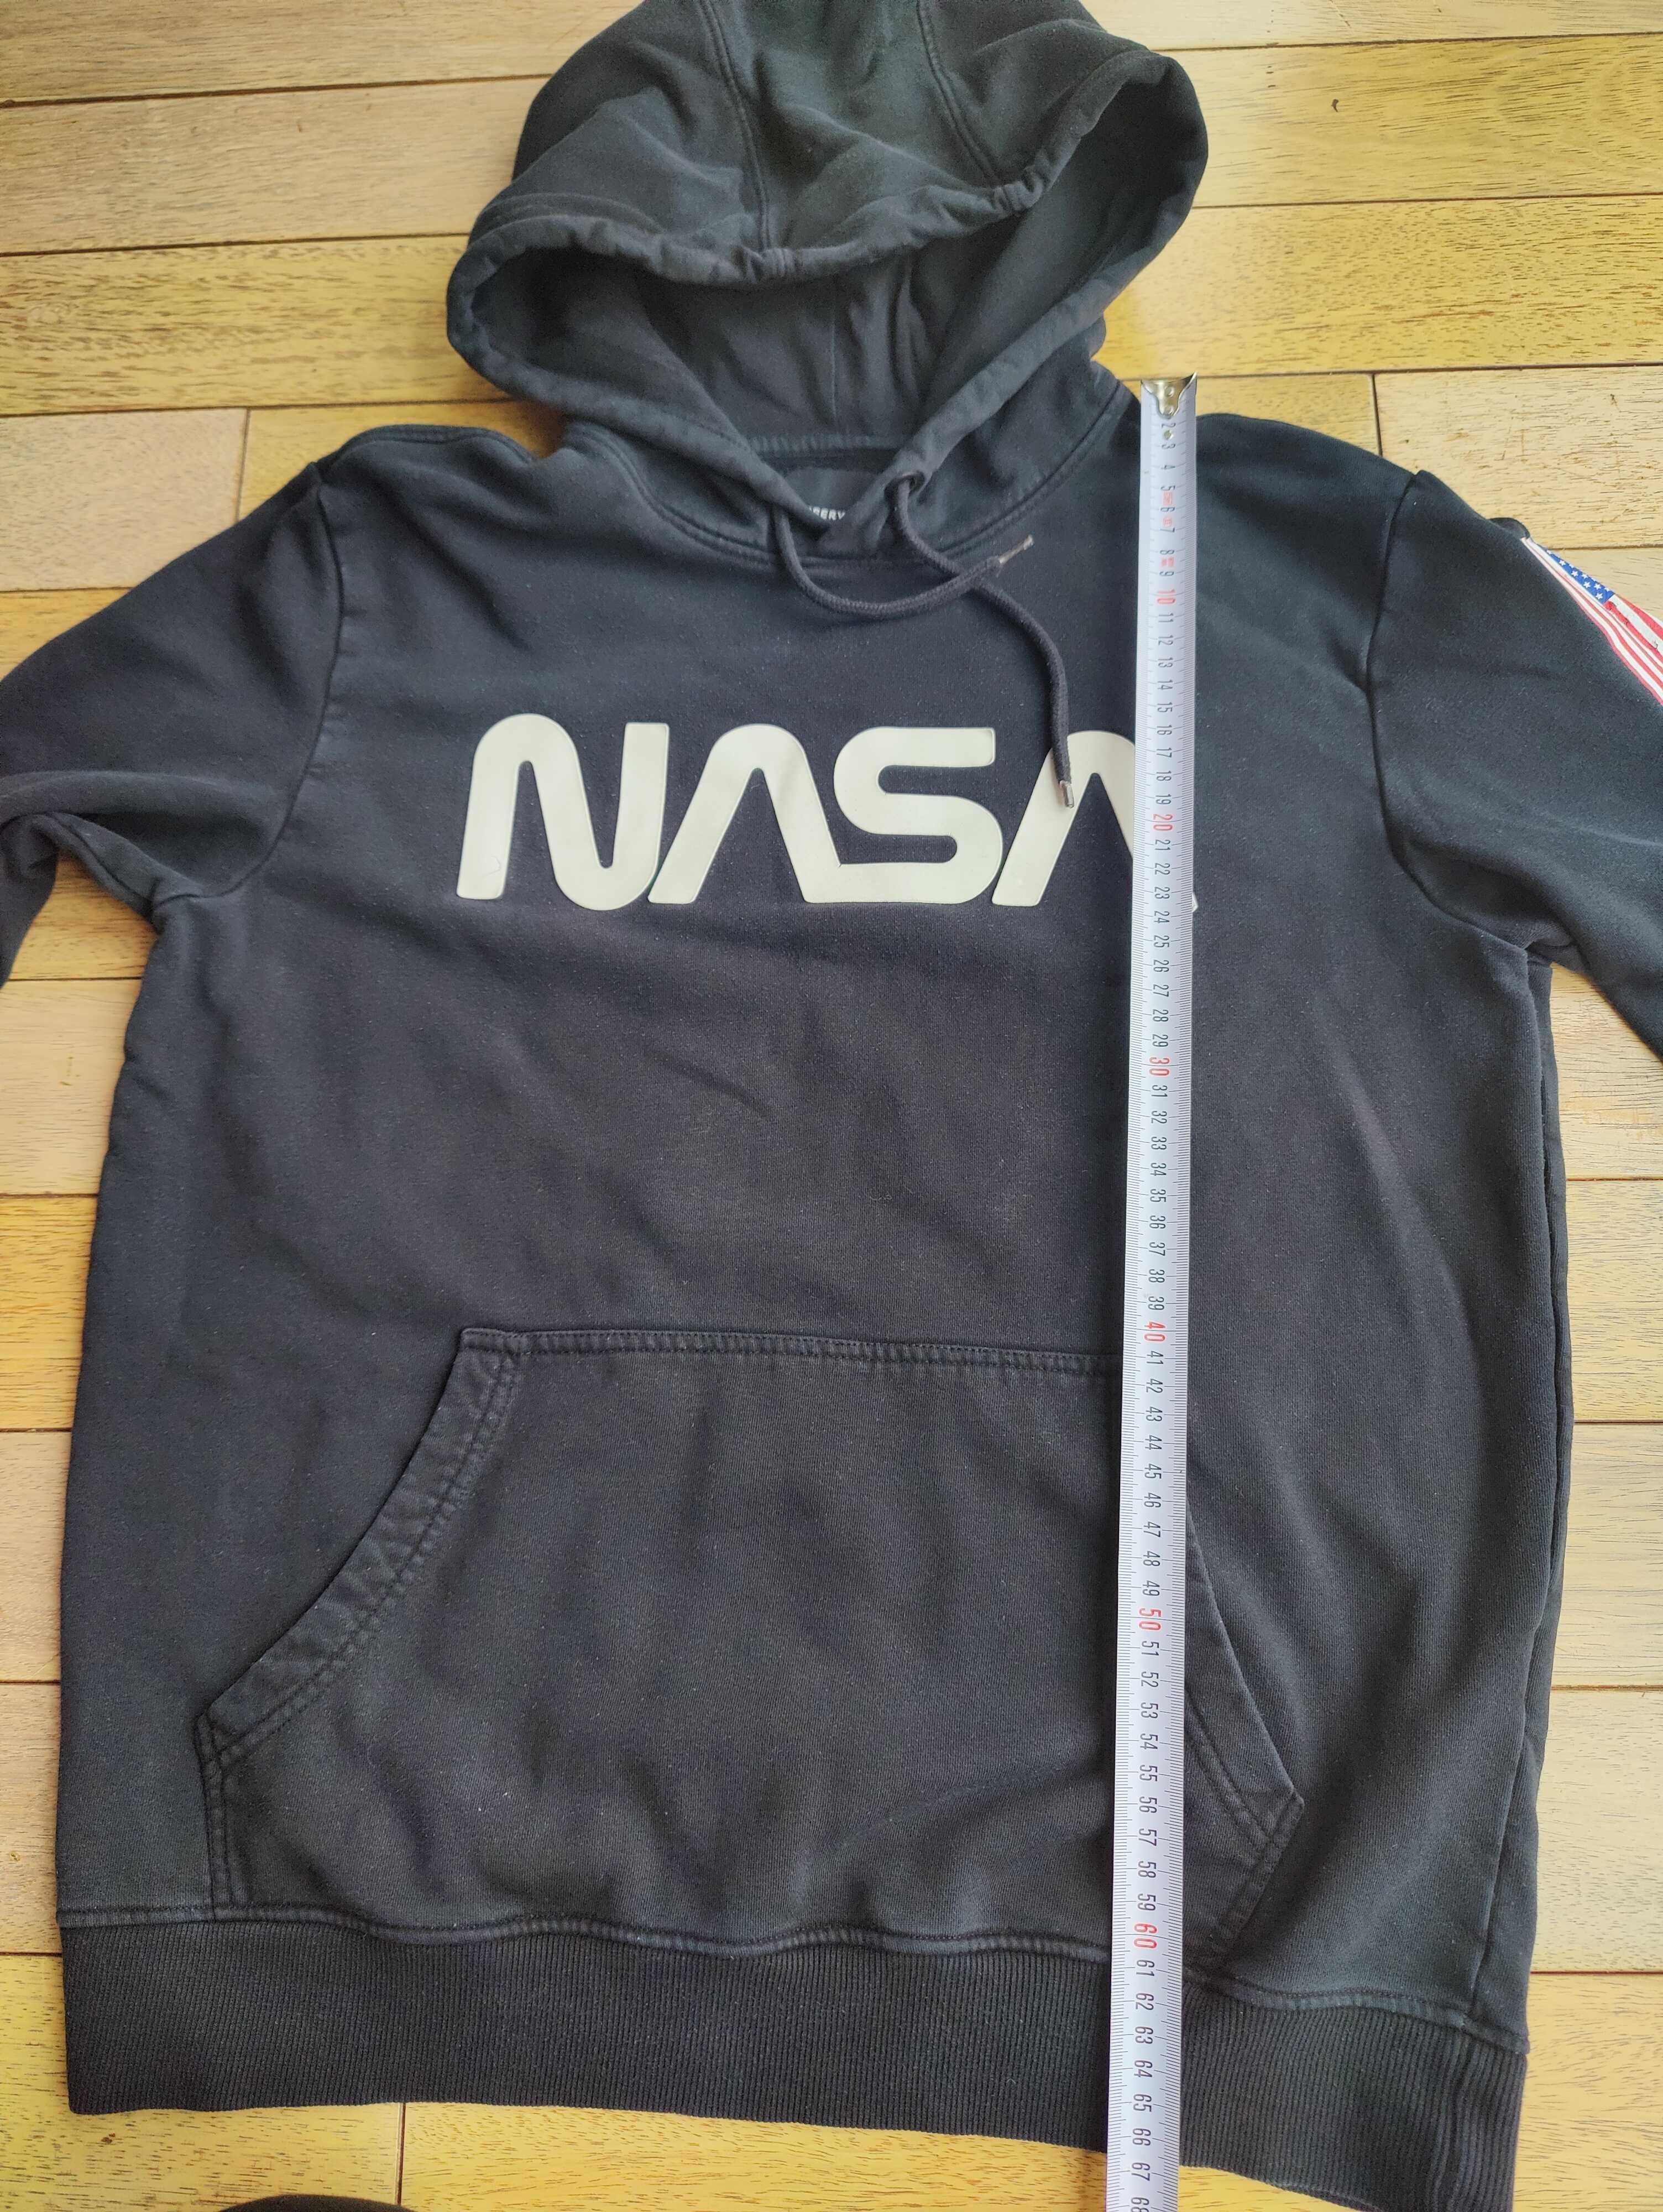 Bluza z kapturem Reserved NASA czarna rozmiar M stan dobry